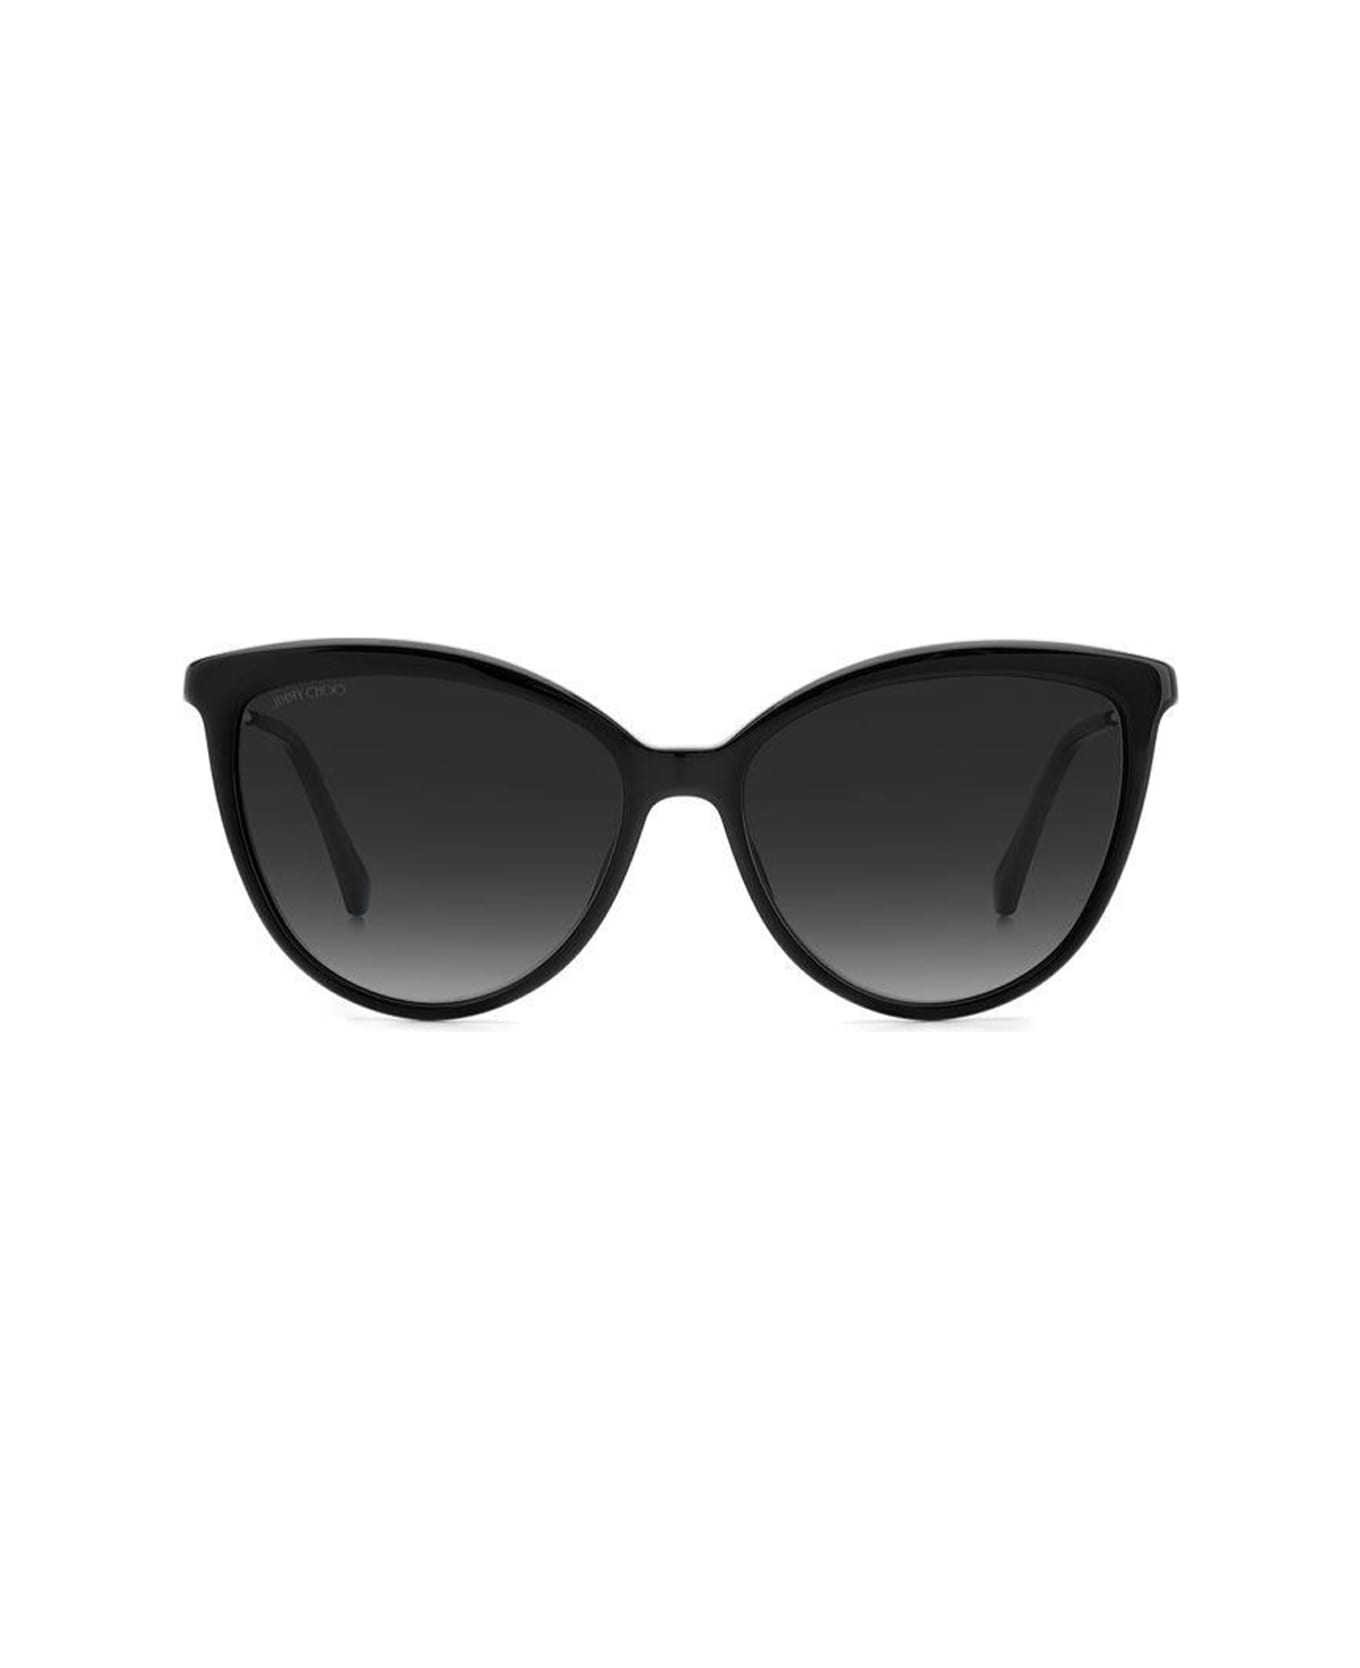 Jimmy Choo Eyewear Jc Belinda/s 807/9o Sunglasses - Nero